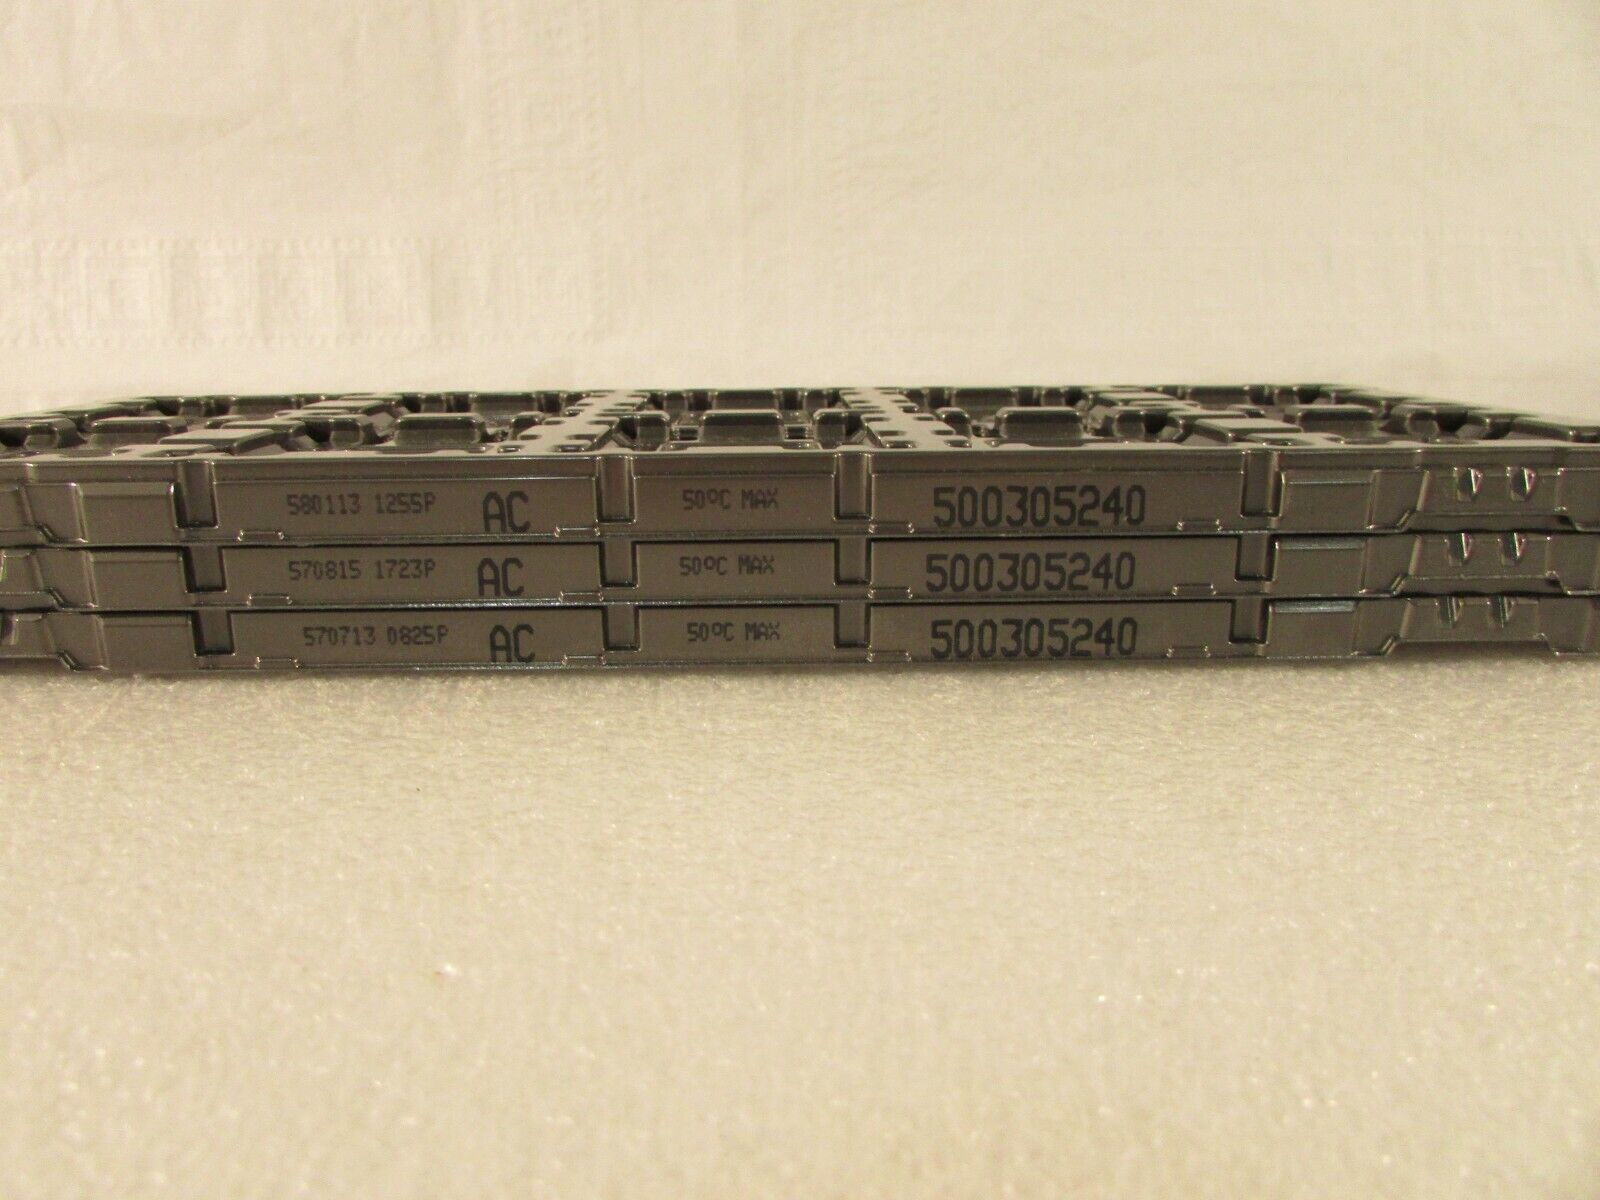 Lot of 3 Intel 500305240 Socket LGA2011 CPU Tray for Xeon * Core i7 